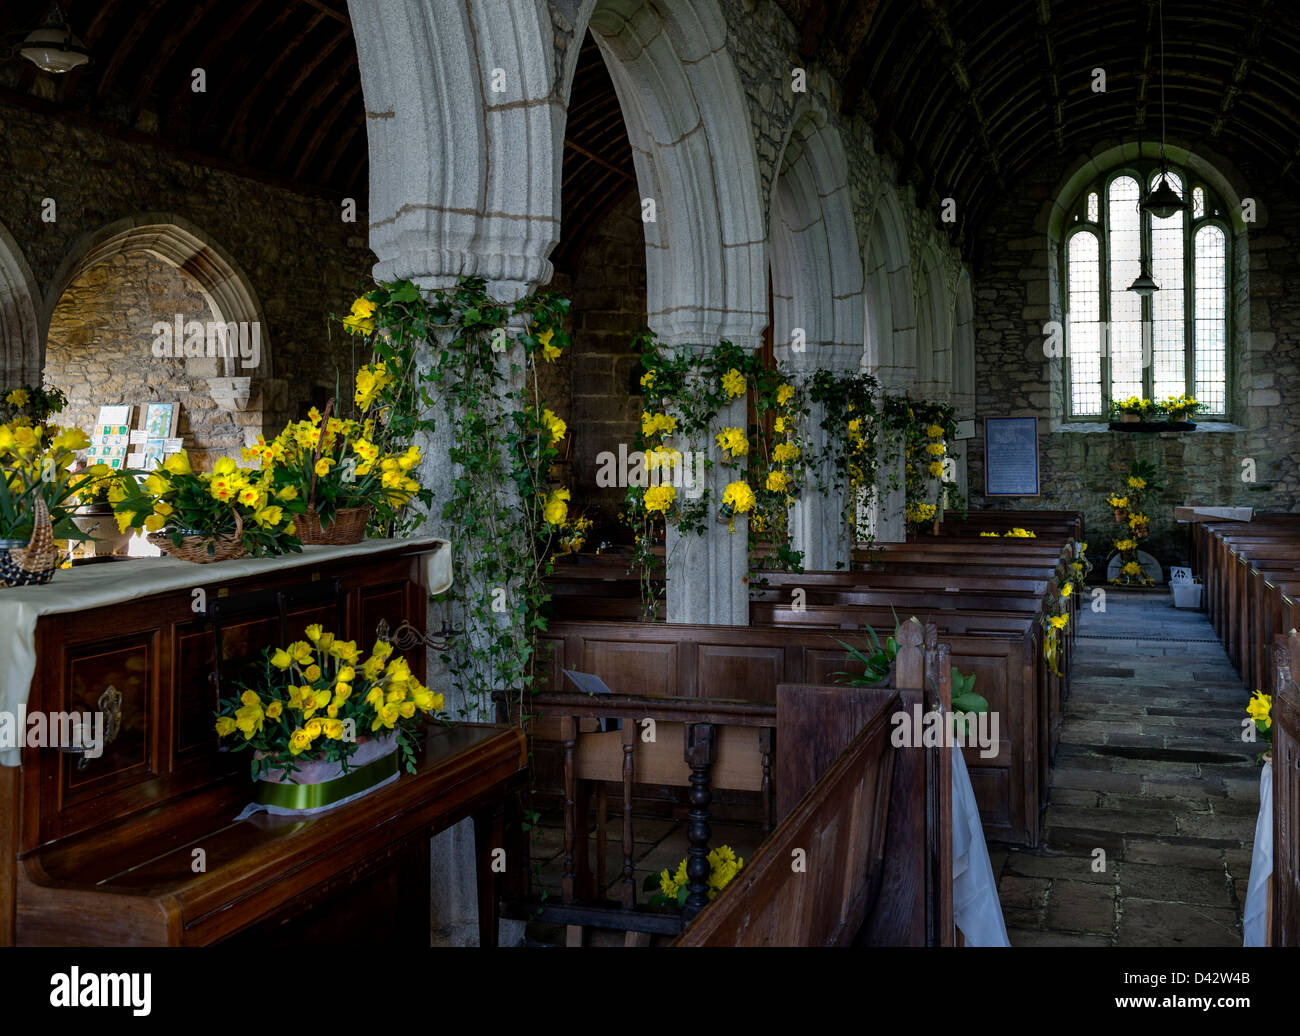 The Daffodil Festival at St Mawgan-in-Meneage Church in Cornwall. Stock Photo